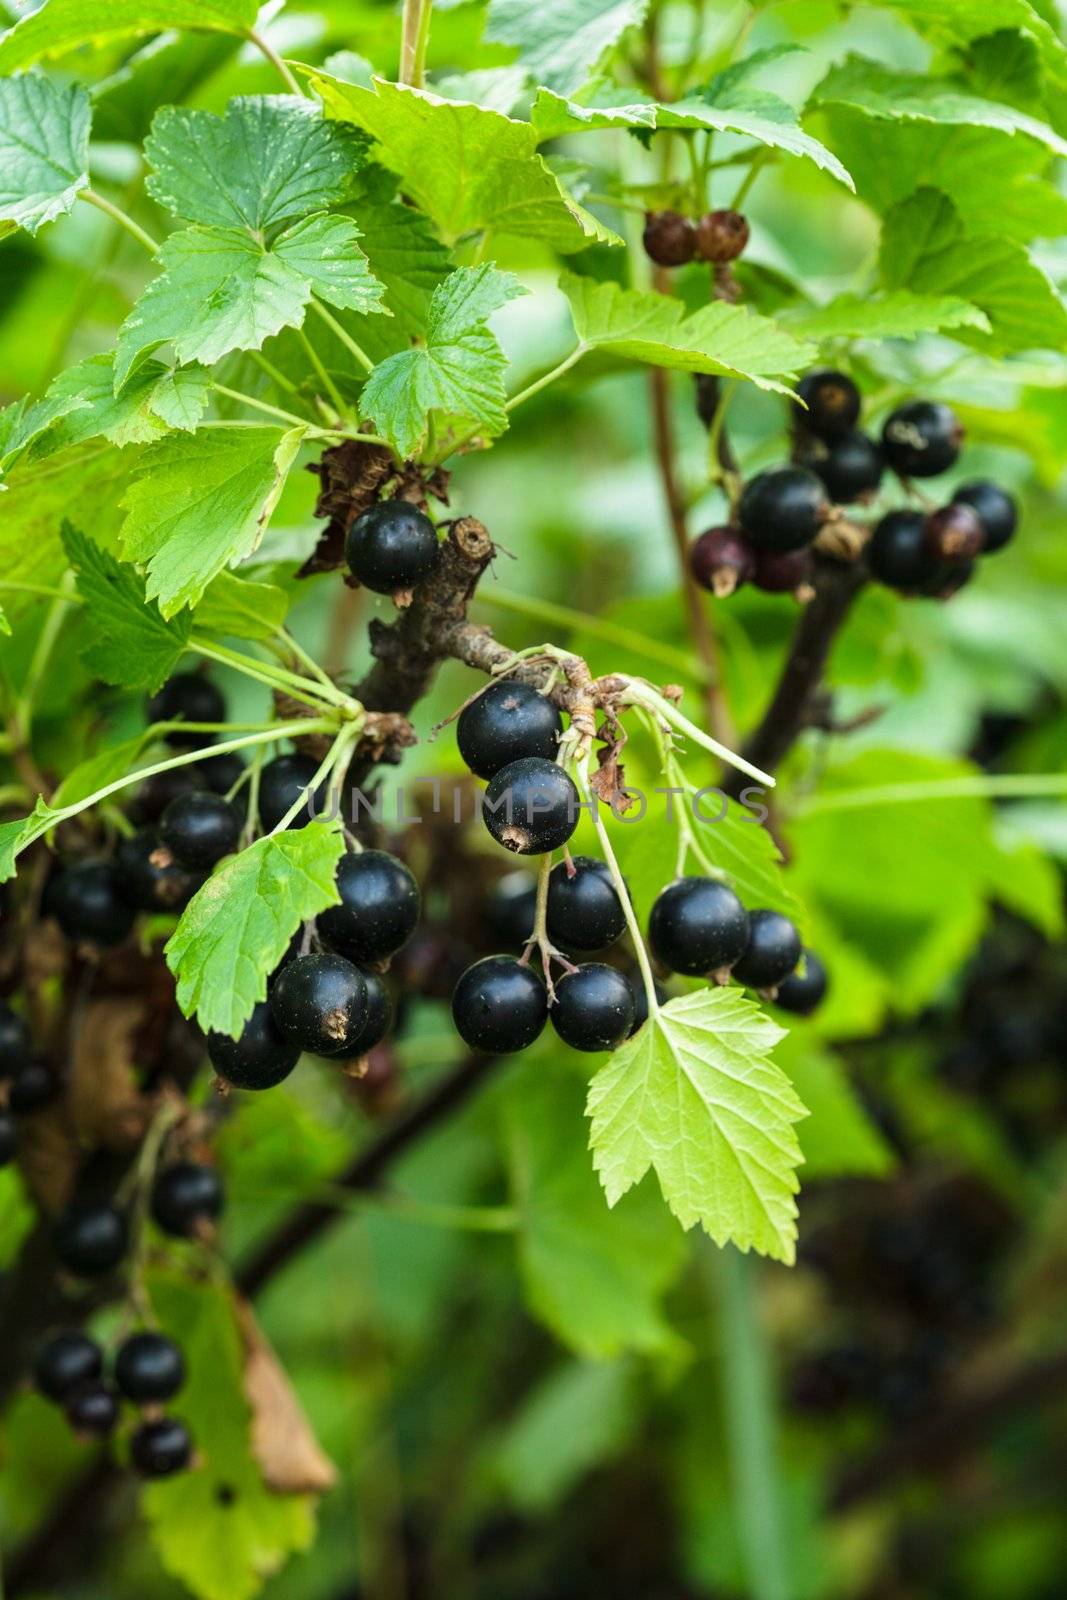 Black currant bush, close up the berries